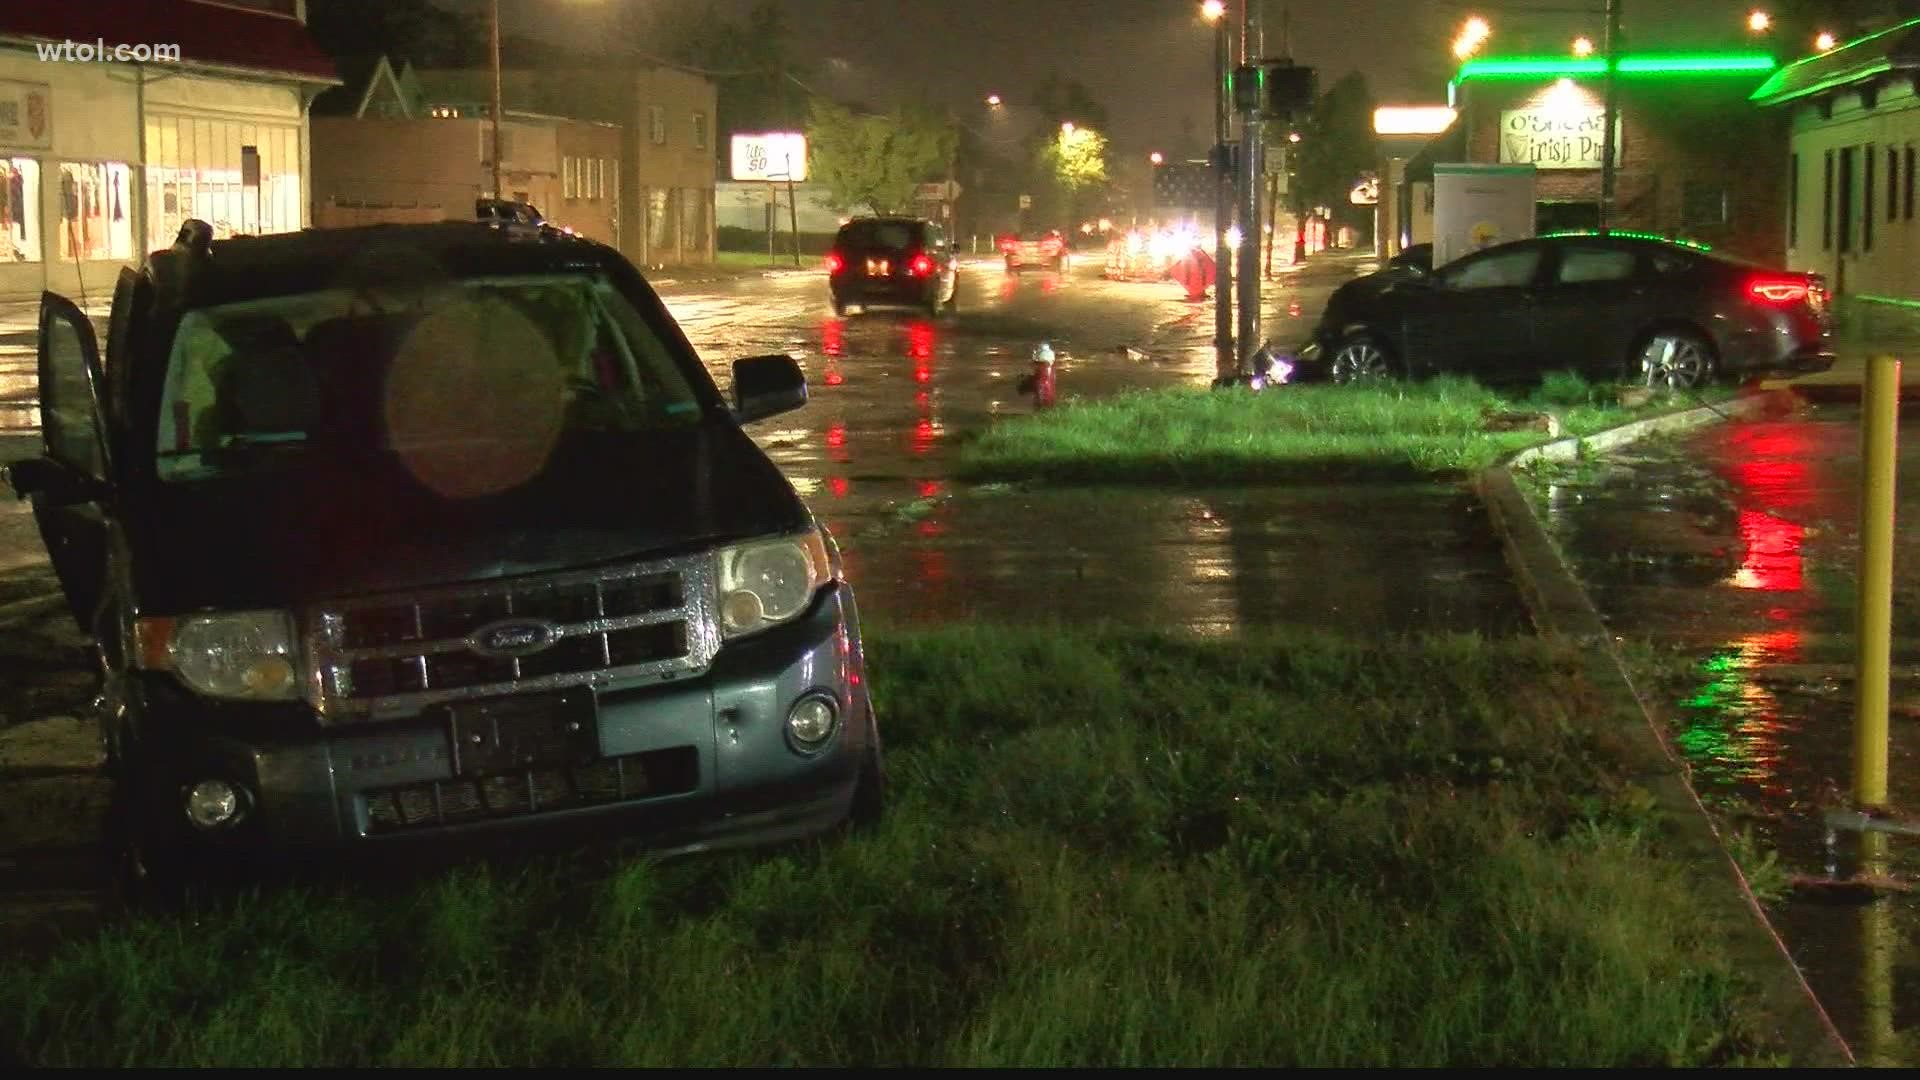 Toledo Police say a car ran a red light